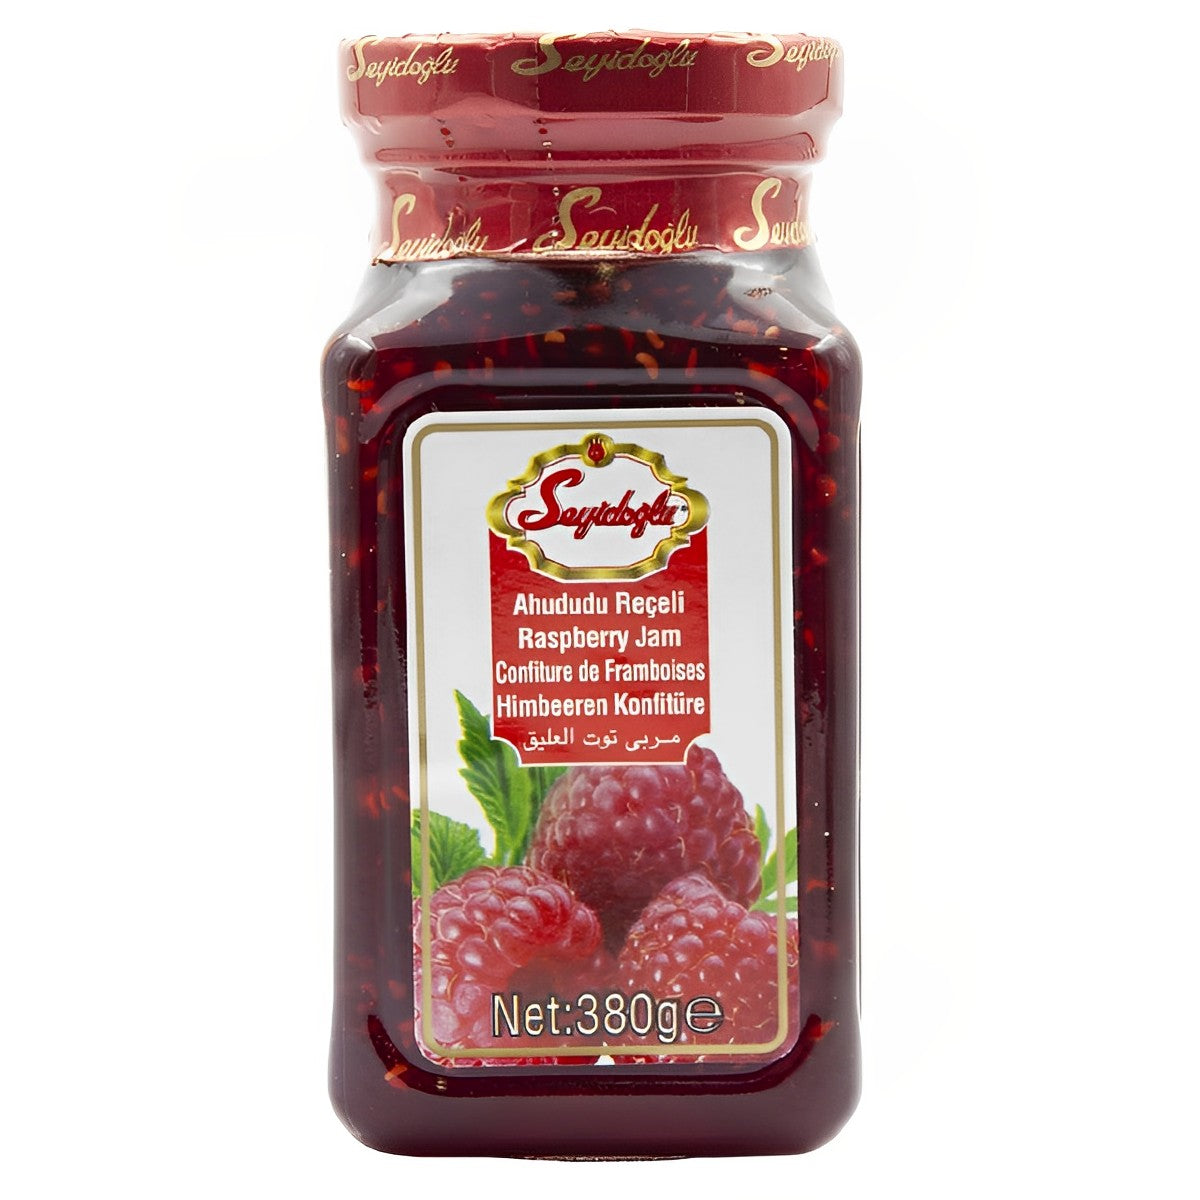 Seyidoglu - Raspberry Jam - 380g - Continental Food Store